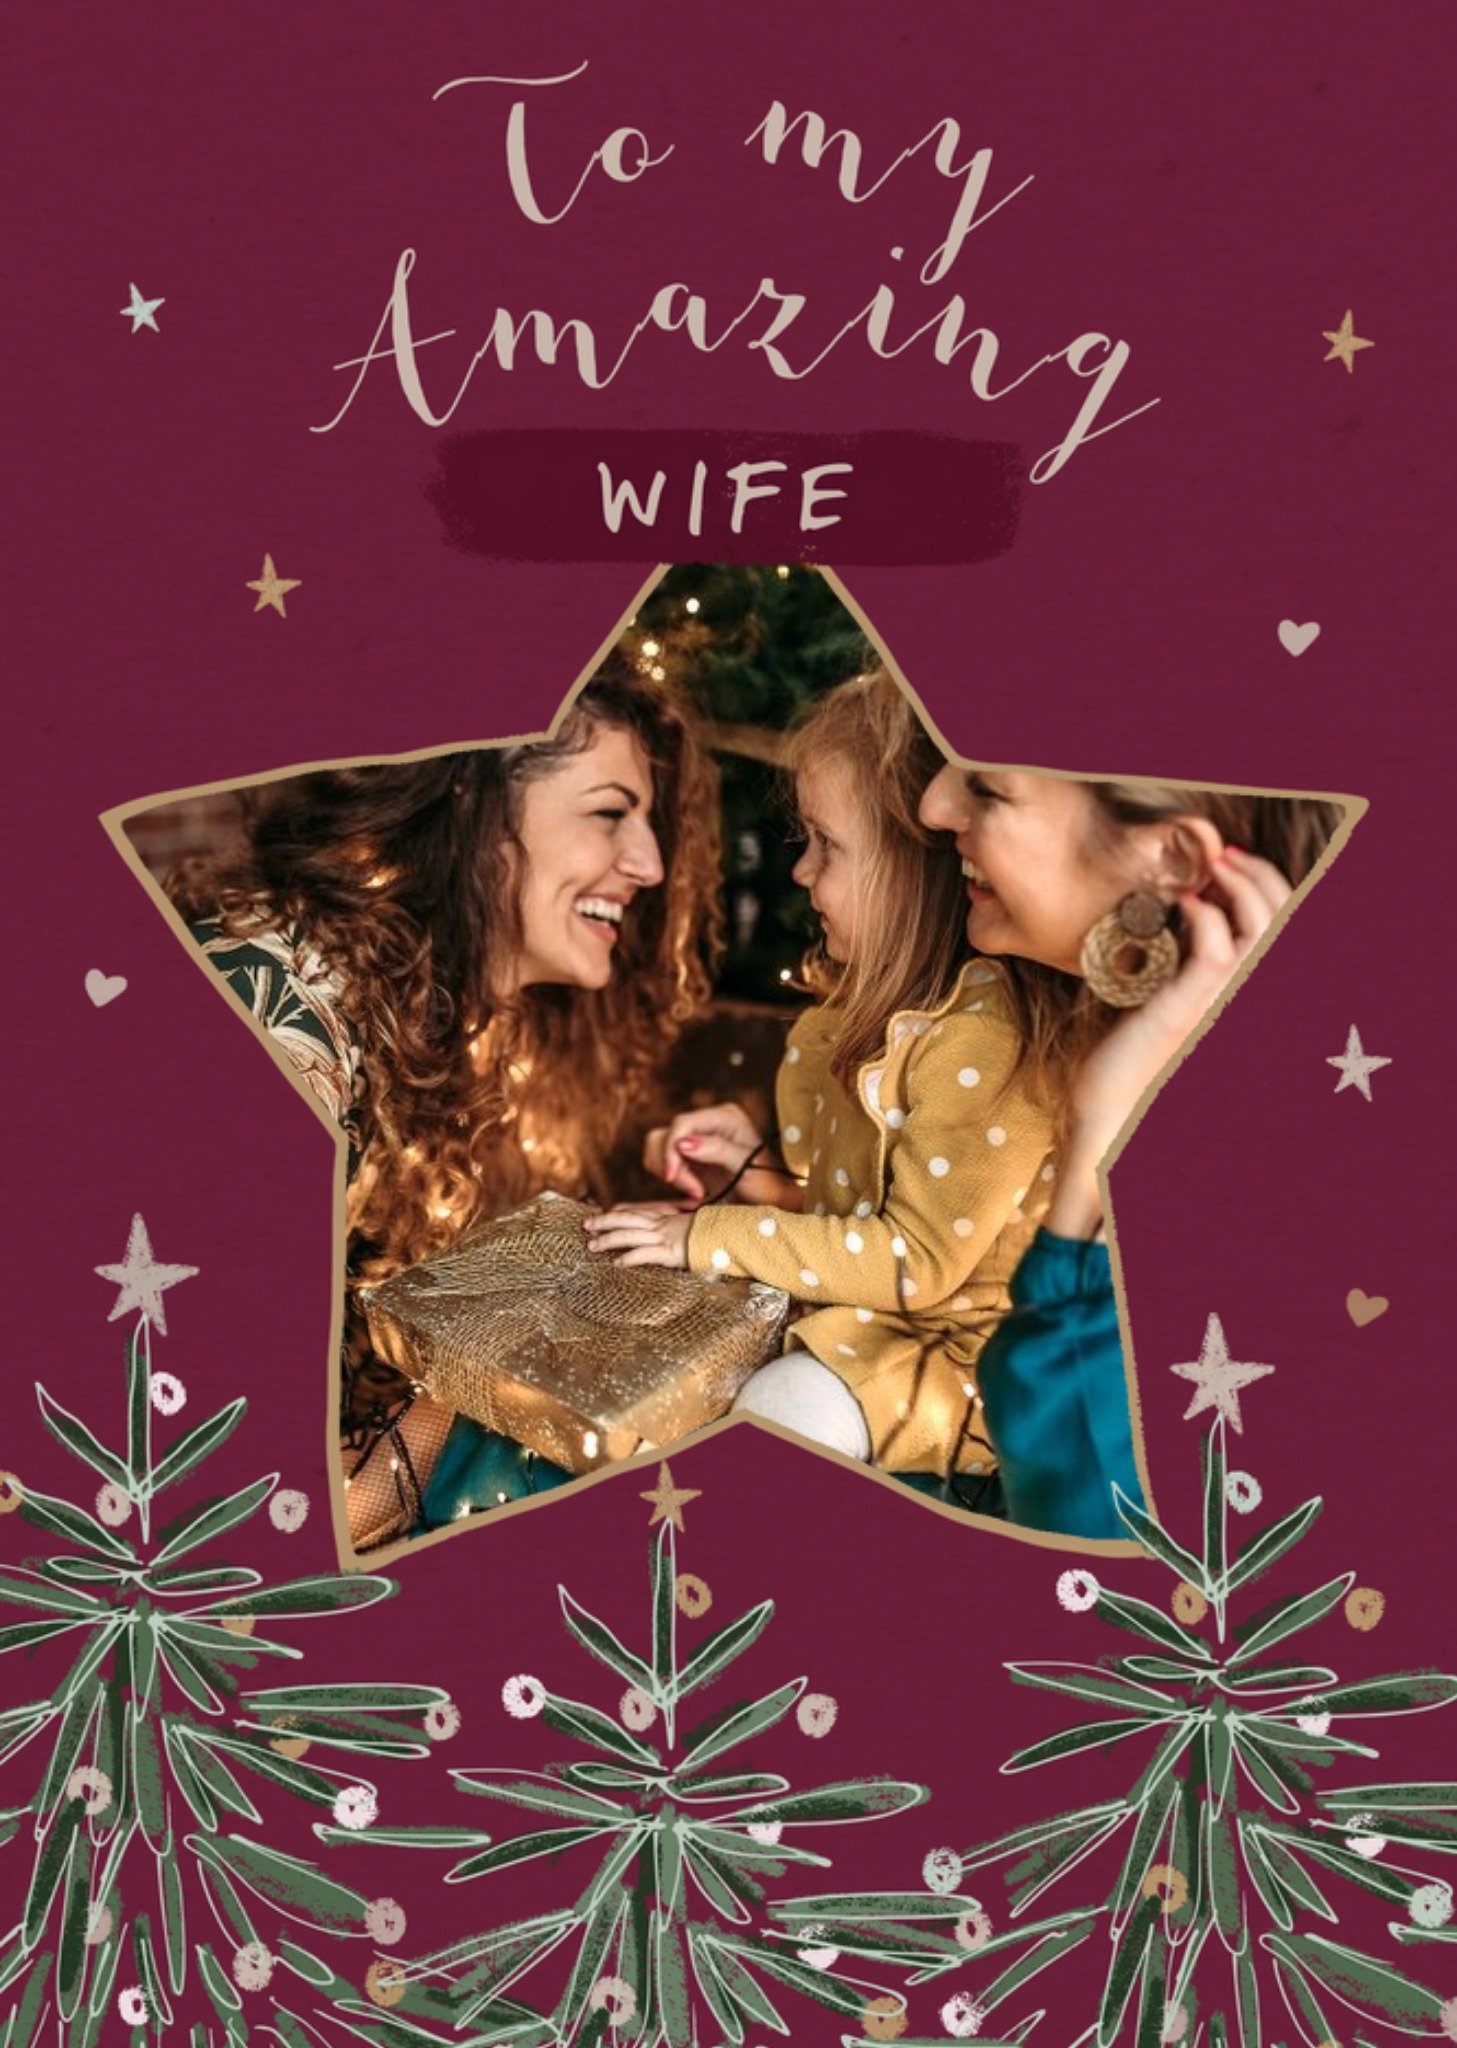 Moonpig Star Illustration Photo Upload Amazing Wife Christmas Card Ecard